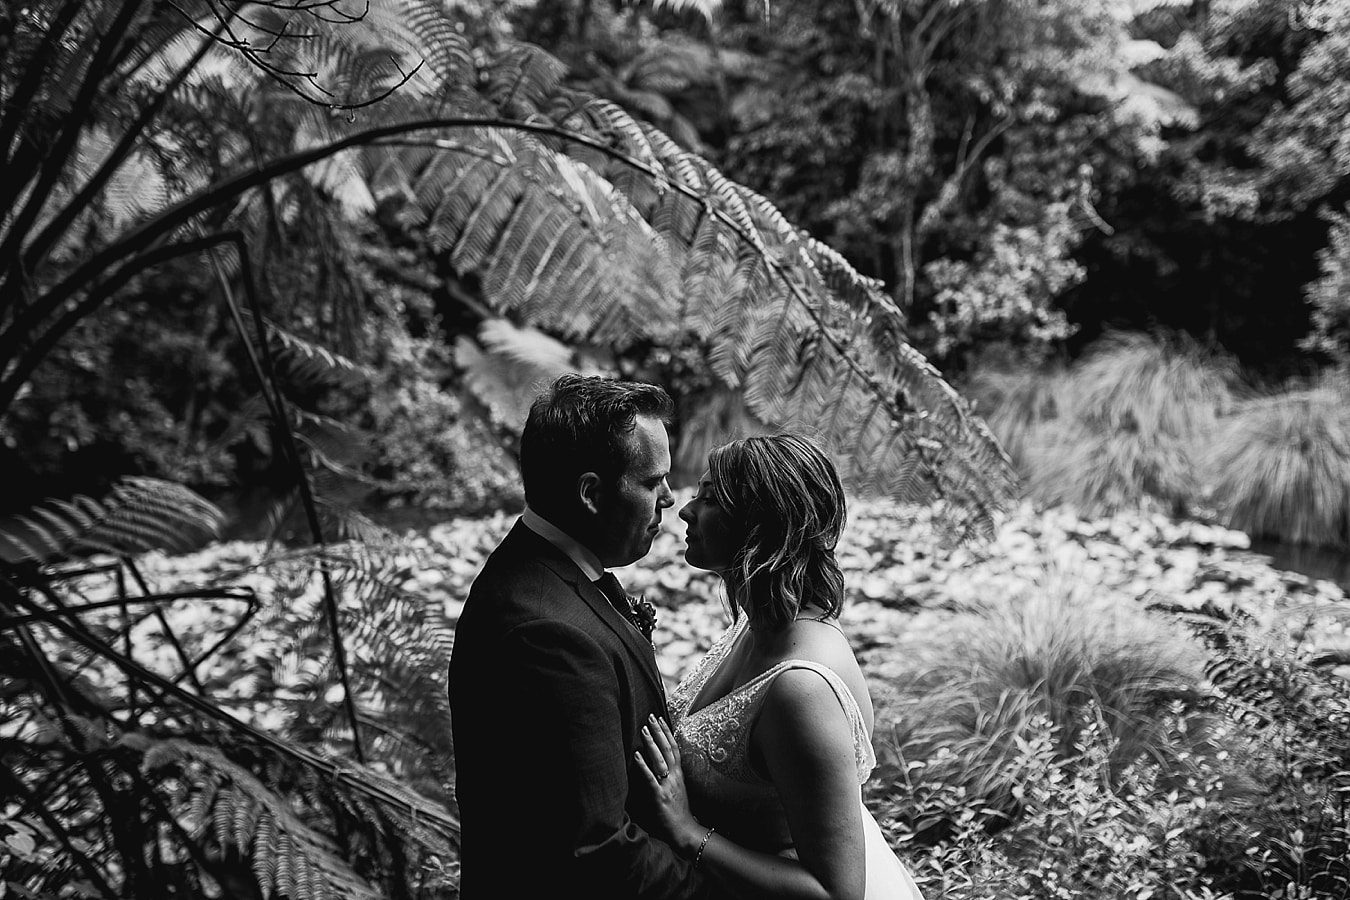 Wedding Photographer New Zealand